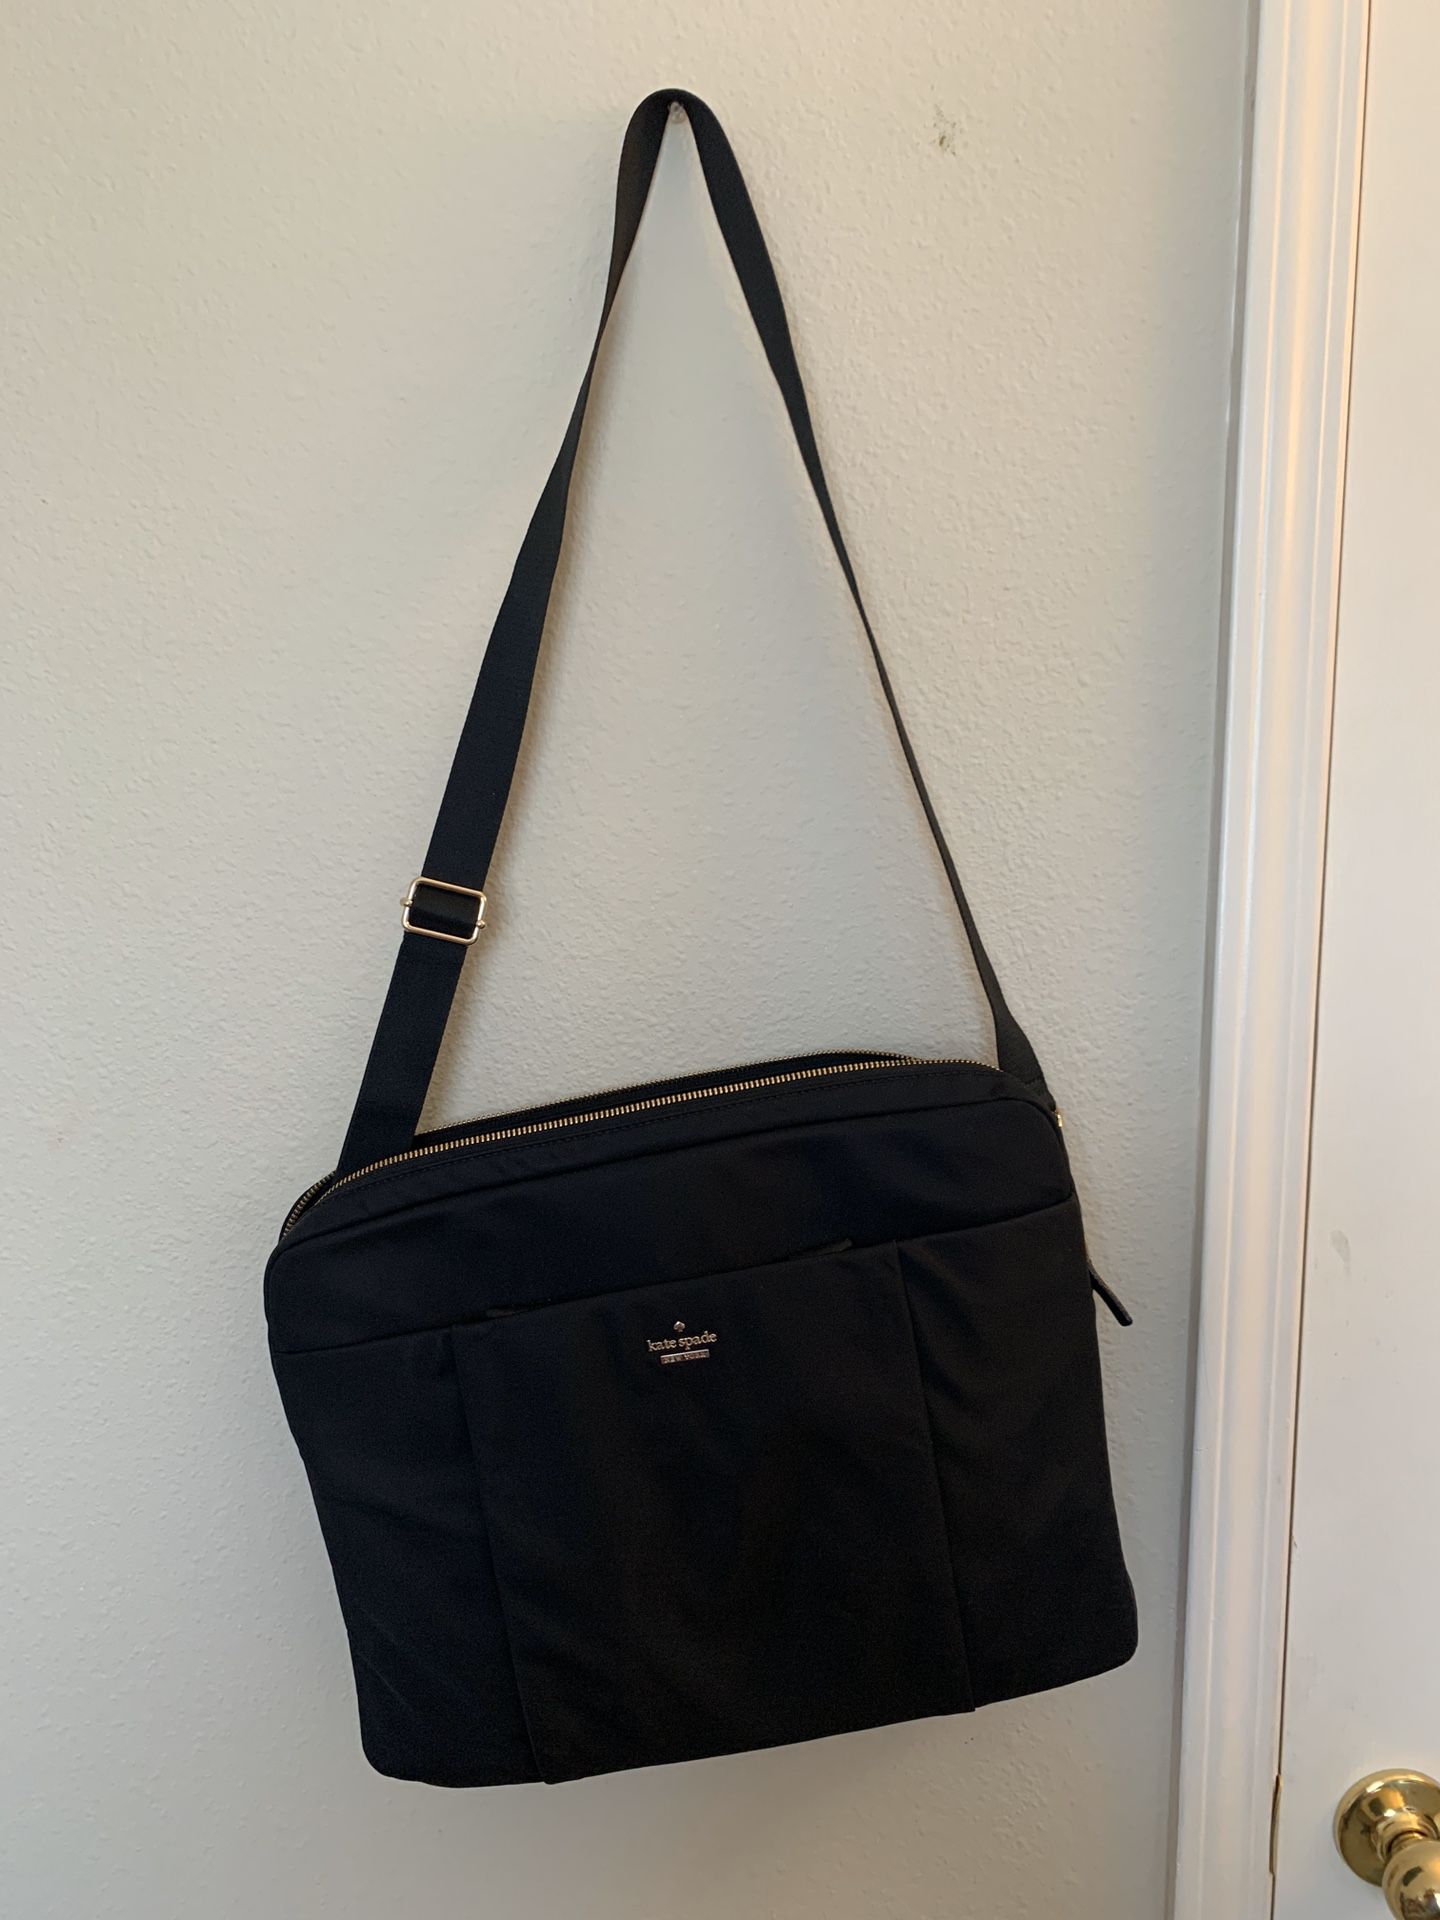 Kate Spade computer / laptop bag purse